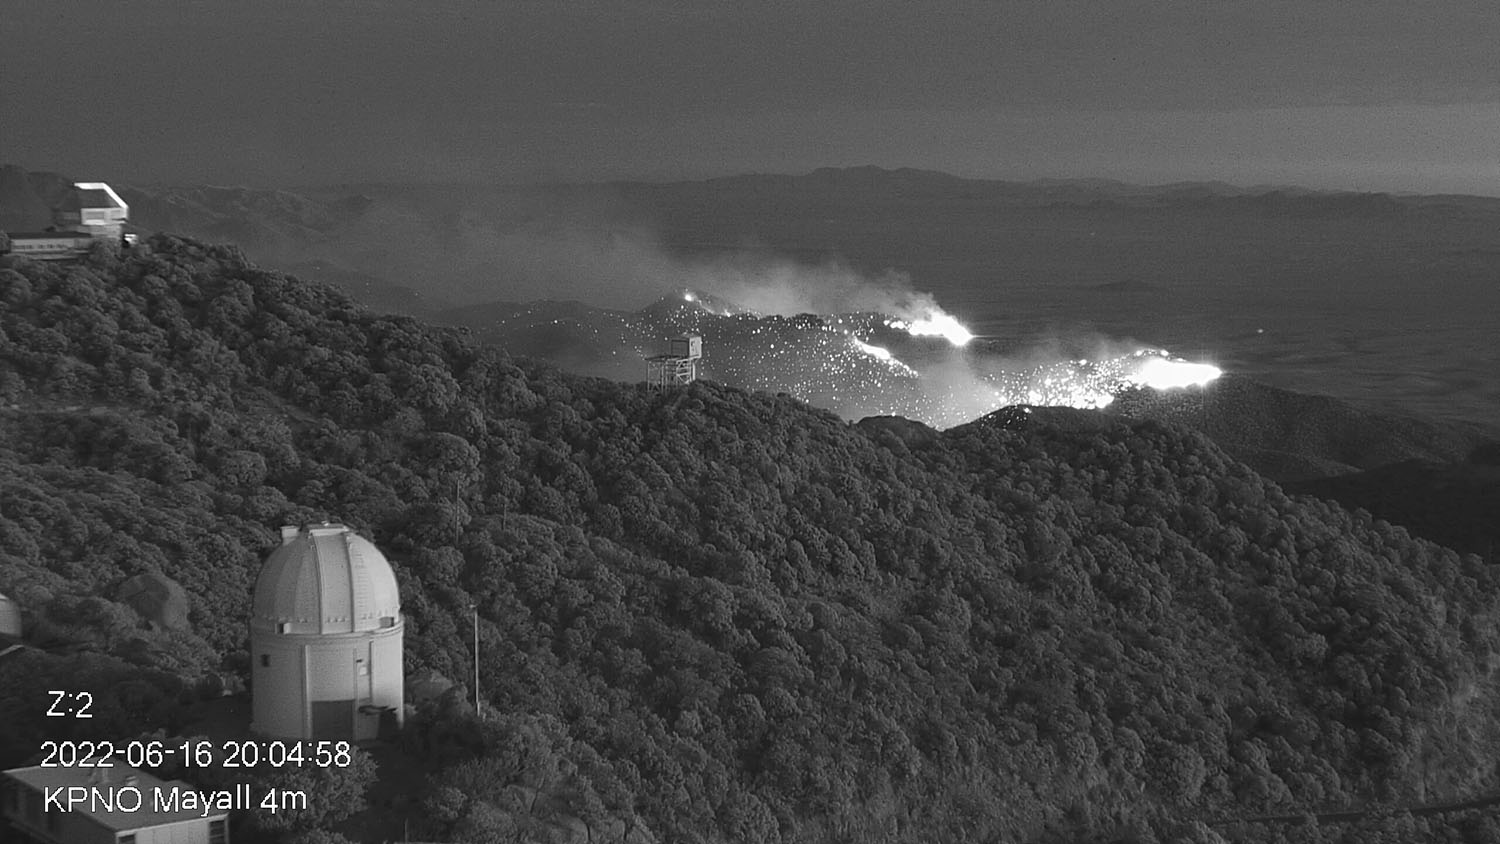 Part of the Contreras Fire burning on the slopes of the Kitt Peak mountain on Thursday evening 16 June 2022. Credit:KPNO/NOIRLab/NSF/AURA